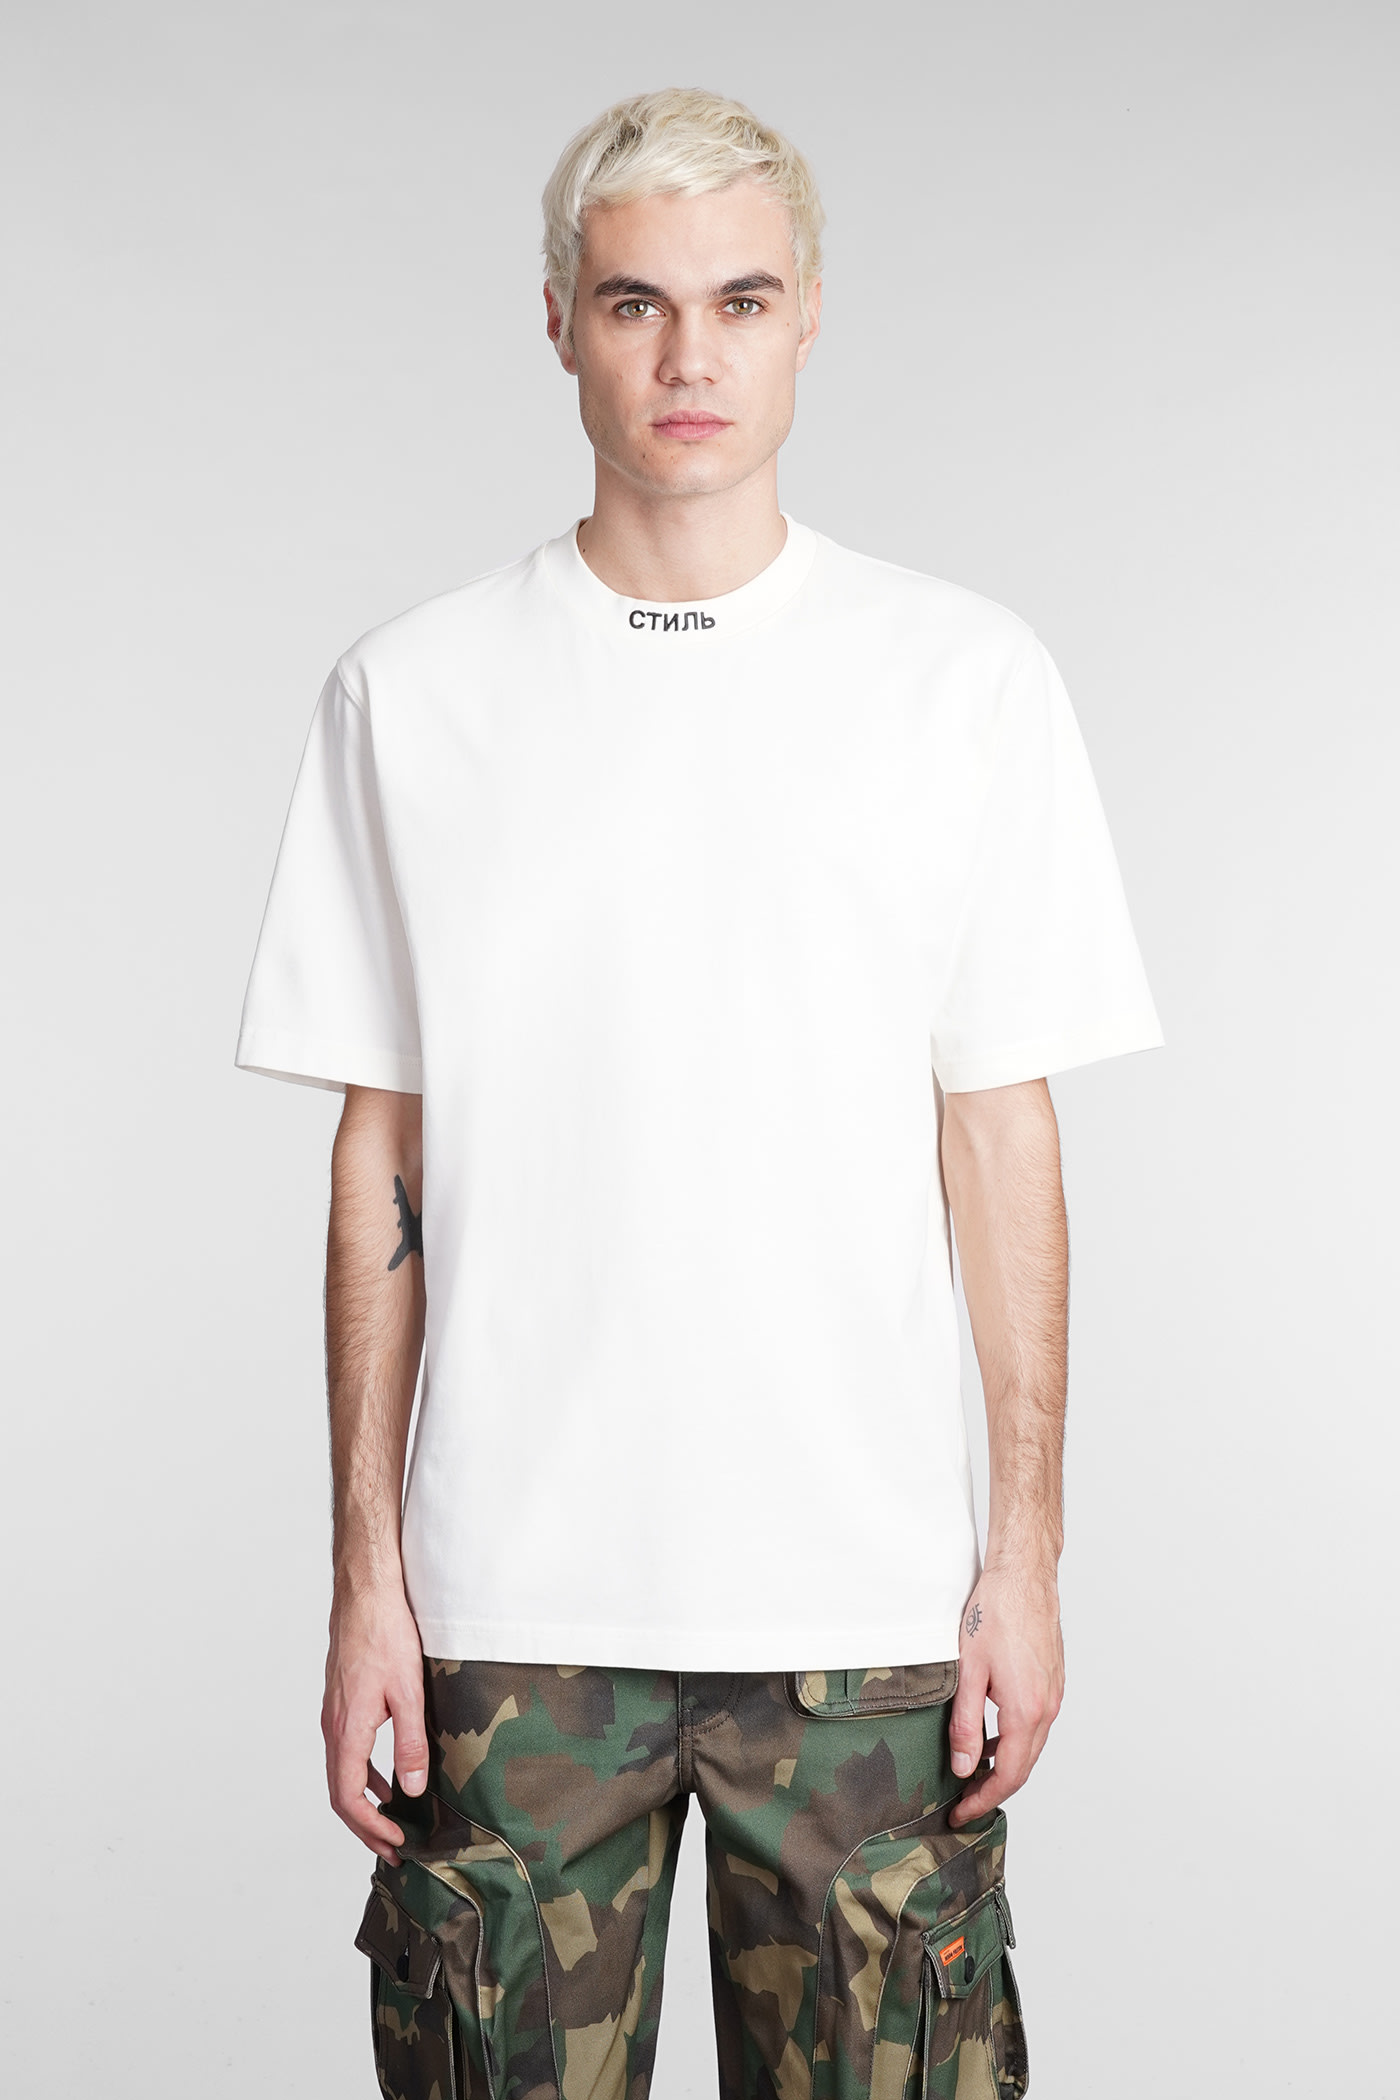 Heron Preston Mock Neck 'стиль' T-Shirt | Smart Closet